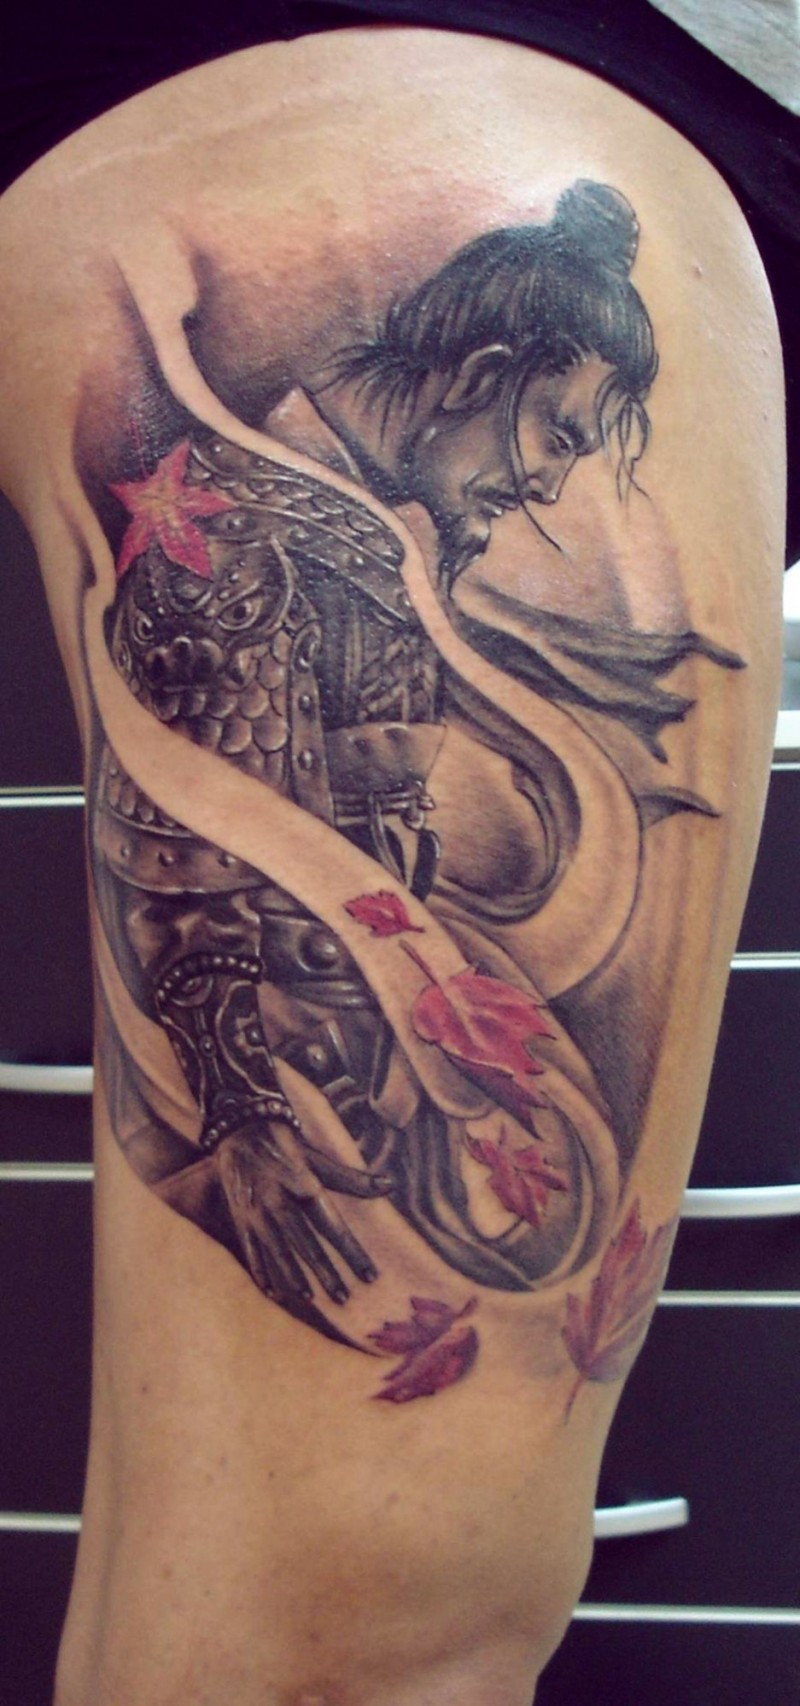 Sad samurai and falling leaves tattoo on shoulder